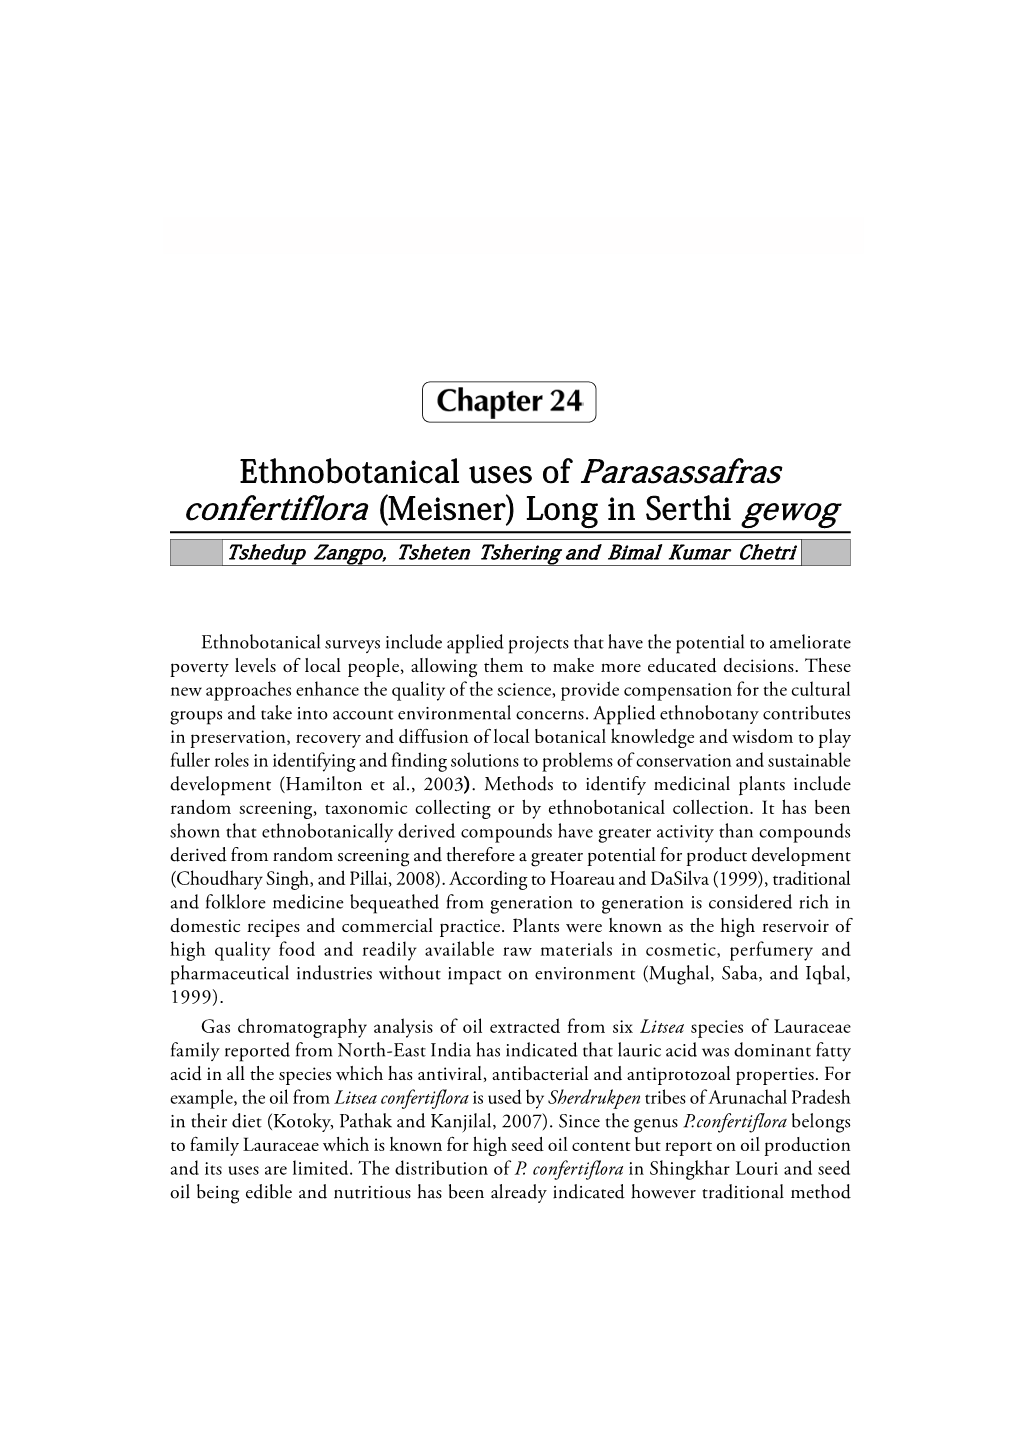 Ethnobotanical Uses of Parasassafras Confertiflora (Meisner) Long in Serthi Gewog Tshedup Zangpo, Tsheten Tshering and Bimal Kumar Chetri